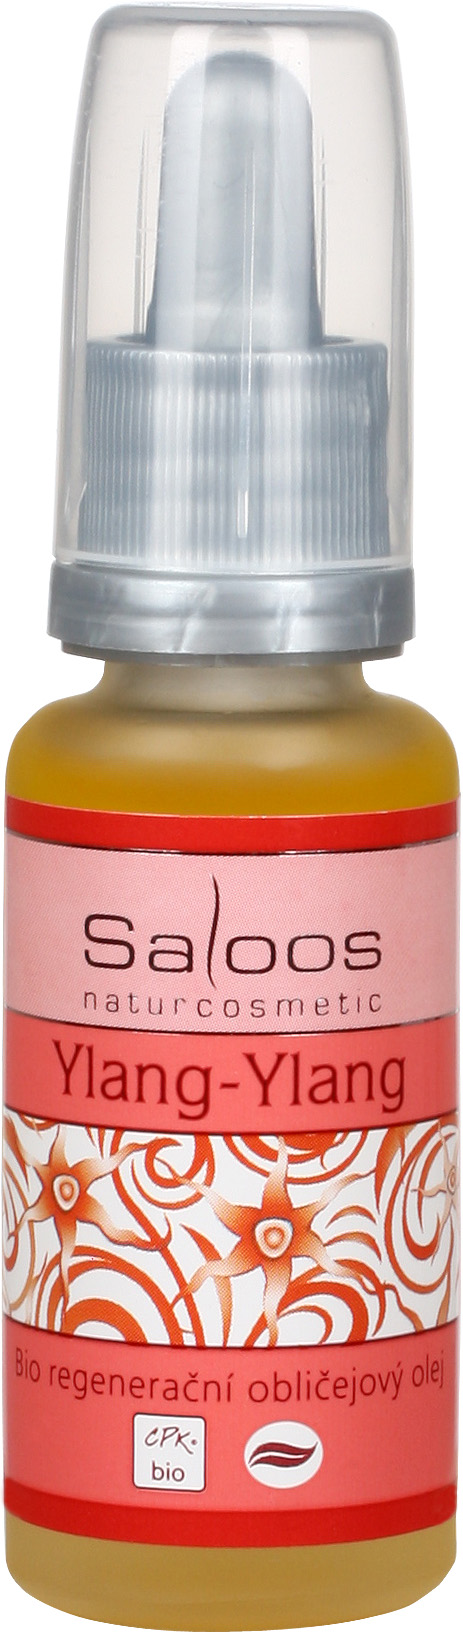 Saloos Ylang-Ylang - pleťový olej 20 20 ml